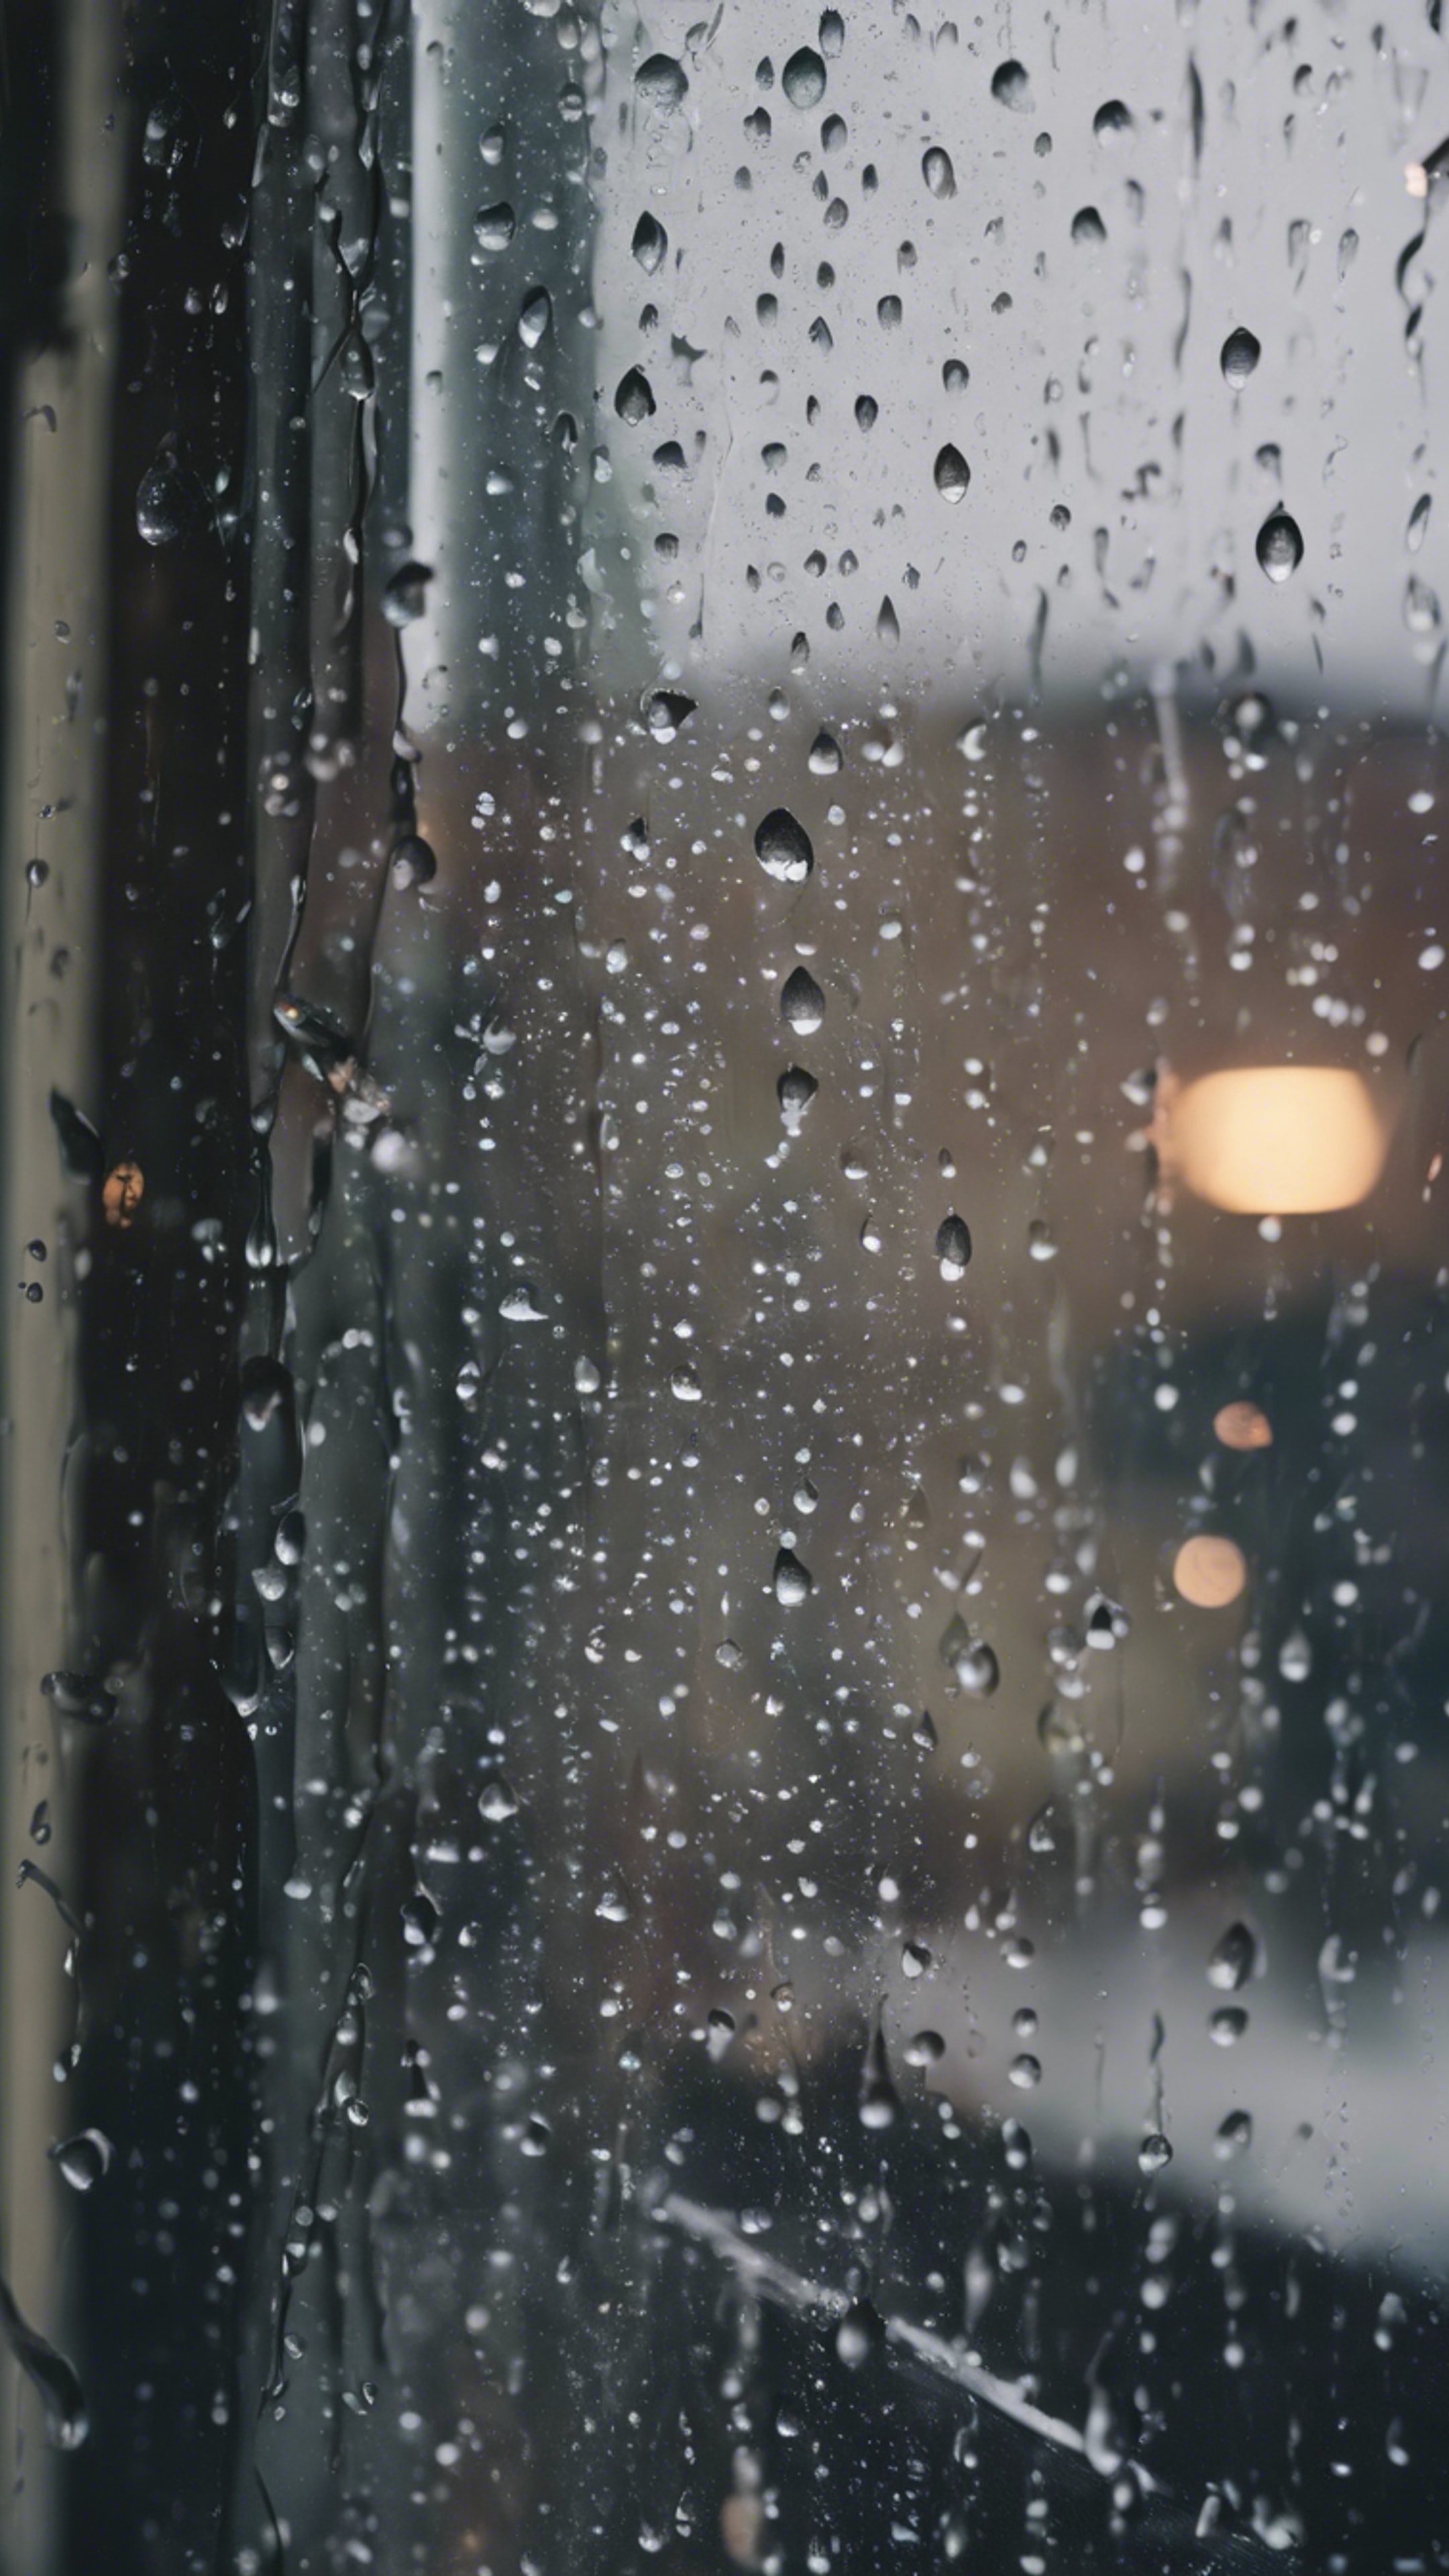 A heavy rainstorm viewed through a window, the droplets streaking down the glass Tapeta na zeď[548369da7c5b4ee9bdb0]